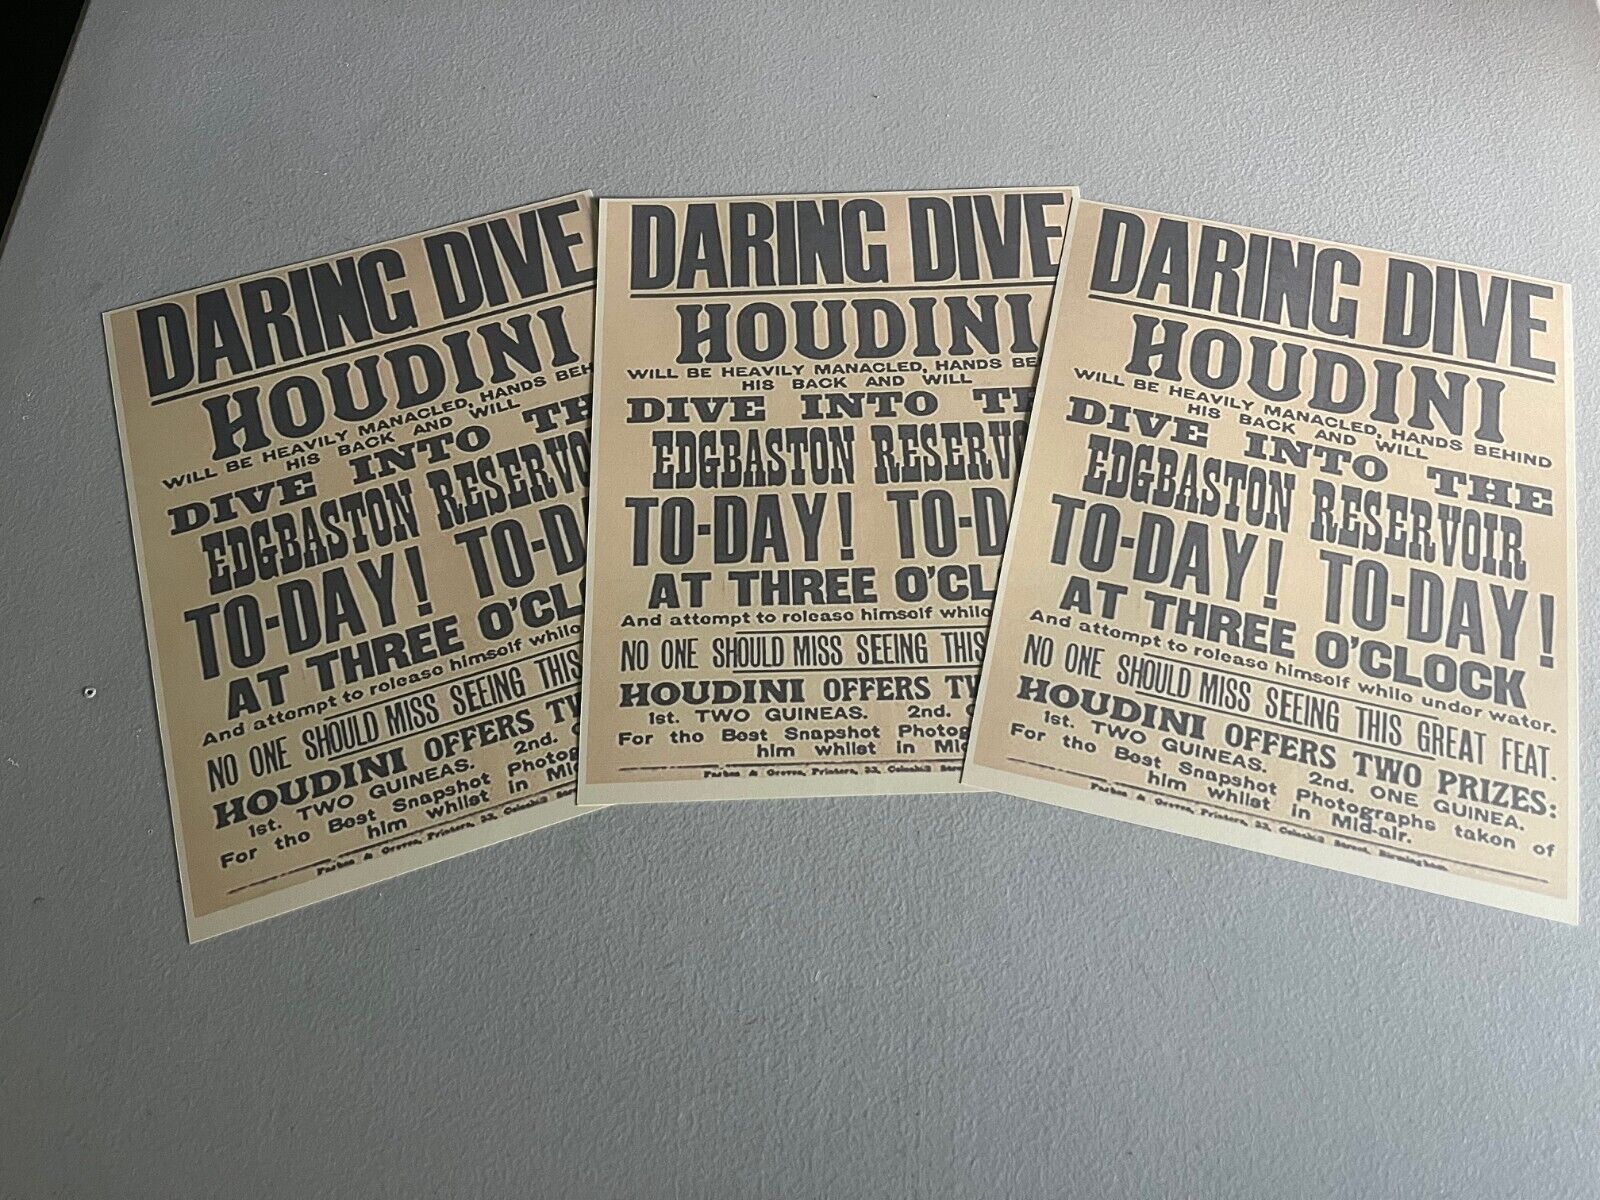 Harry Houdini, Reprint Handbill to Advertise his Daring Dive into Edgbaston Res